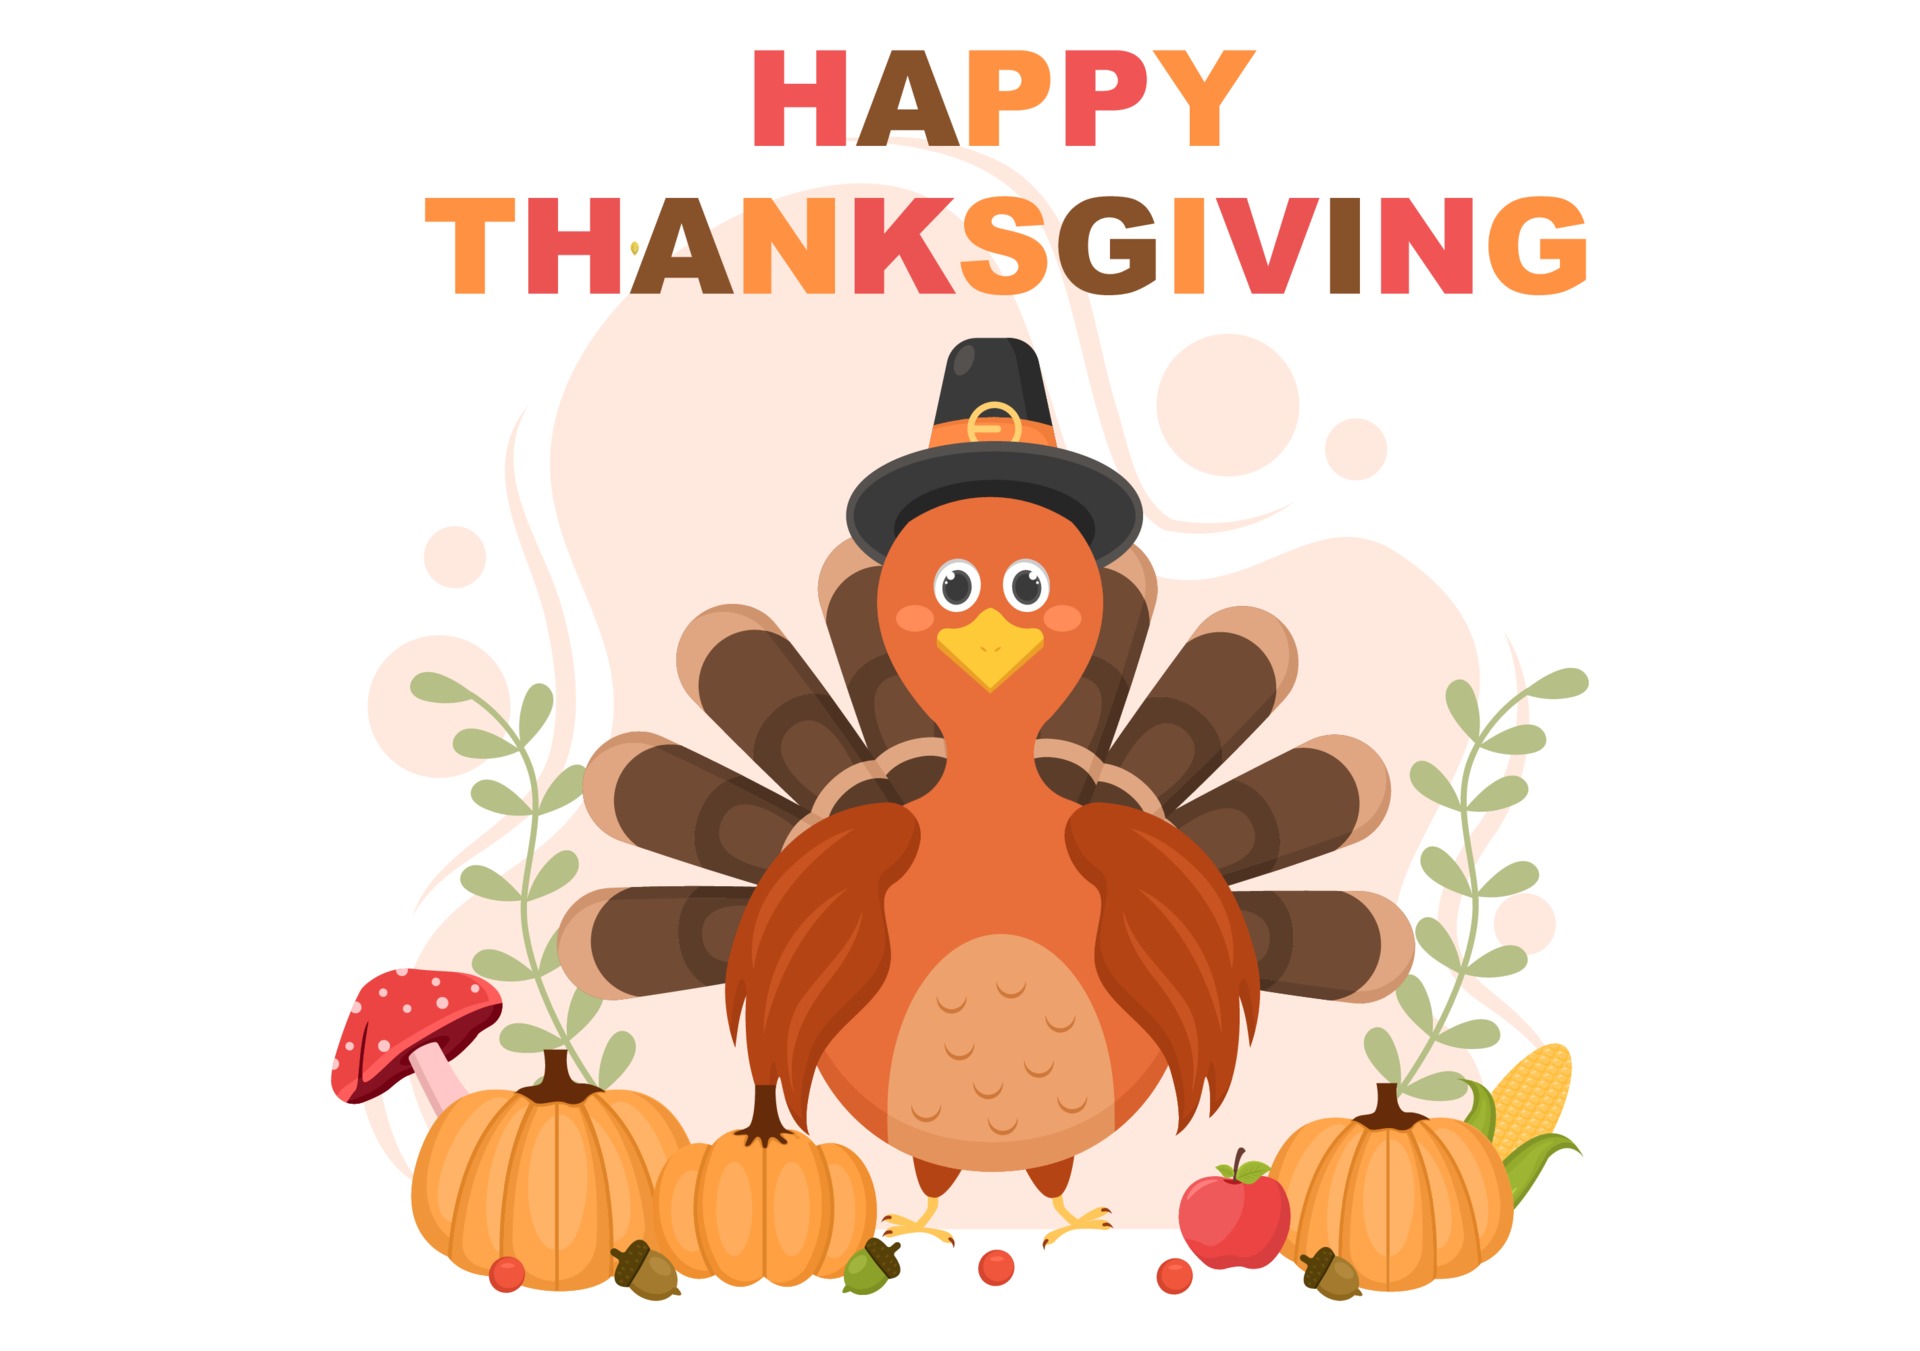 Happy Thanksgiving with Cartoon Turkey Vector Illustration 3238473 Vector  Art at Vecteezy